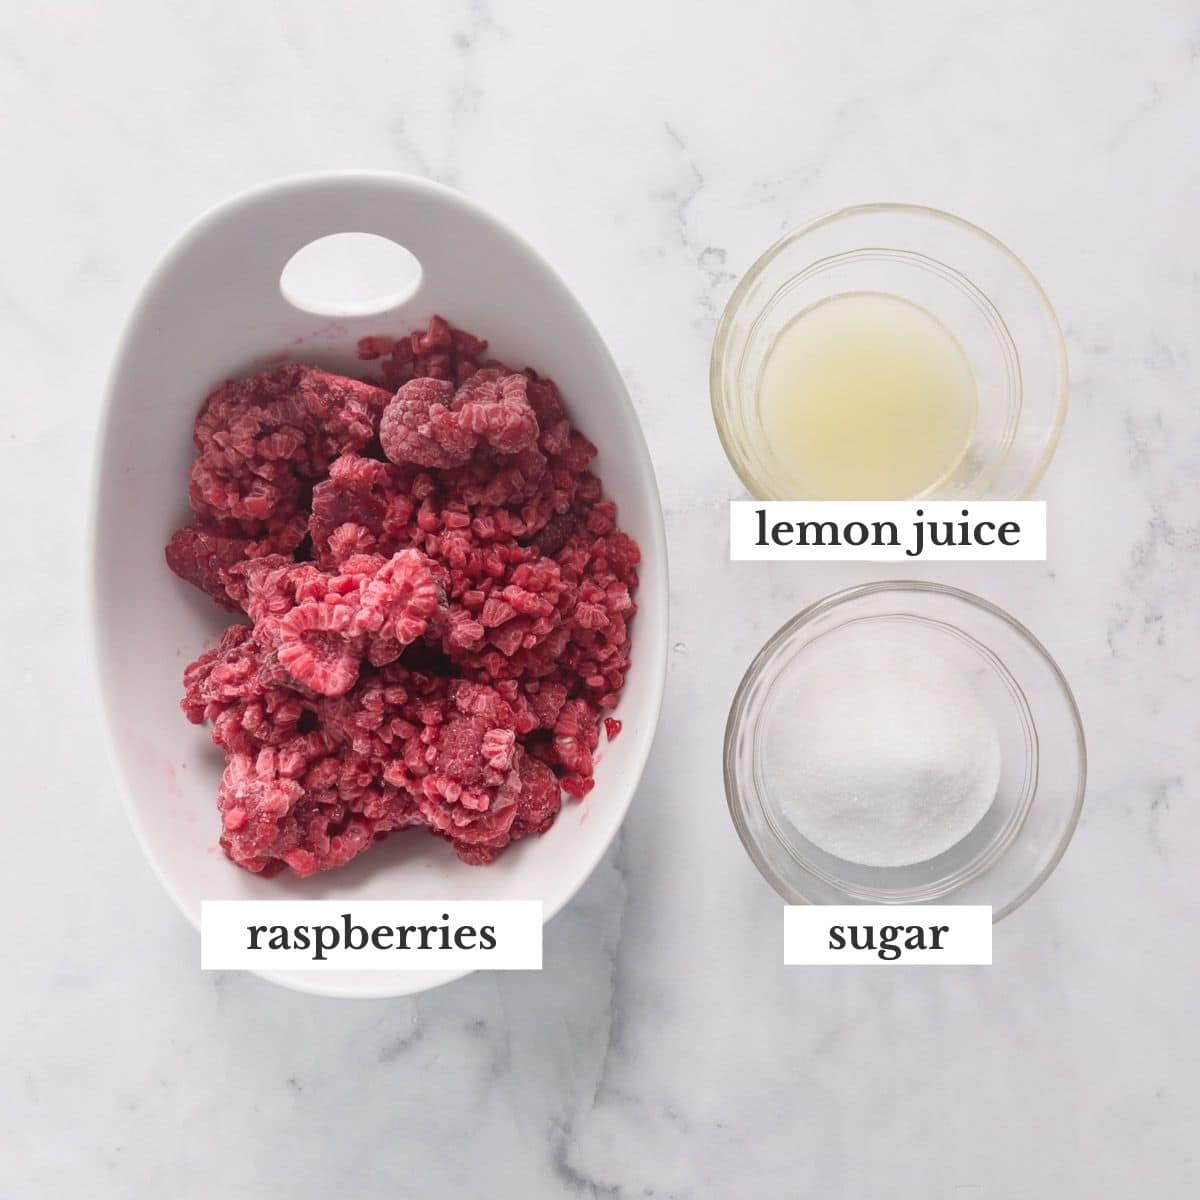 Raspberry coulis ingredients.